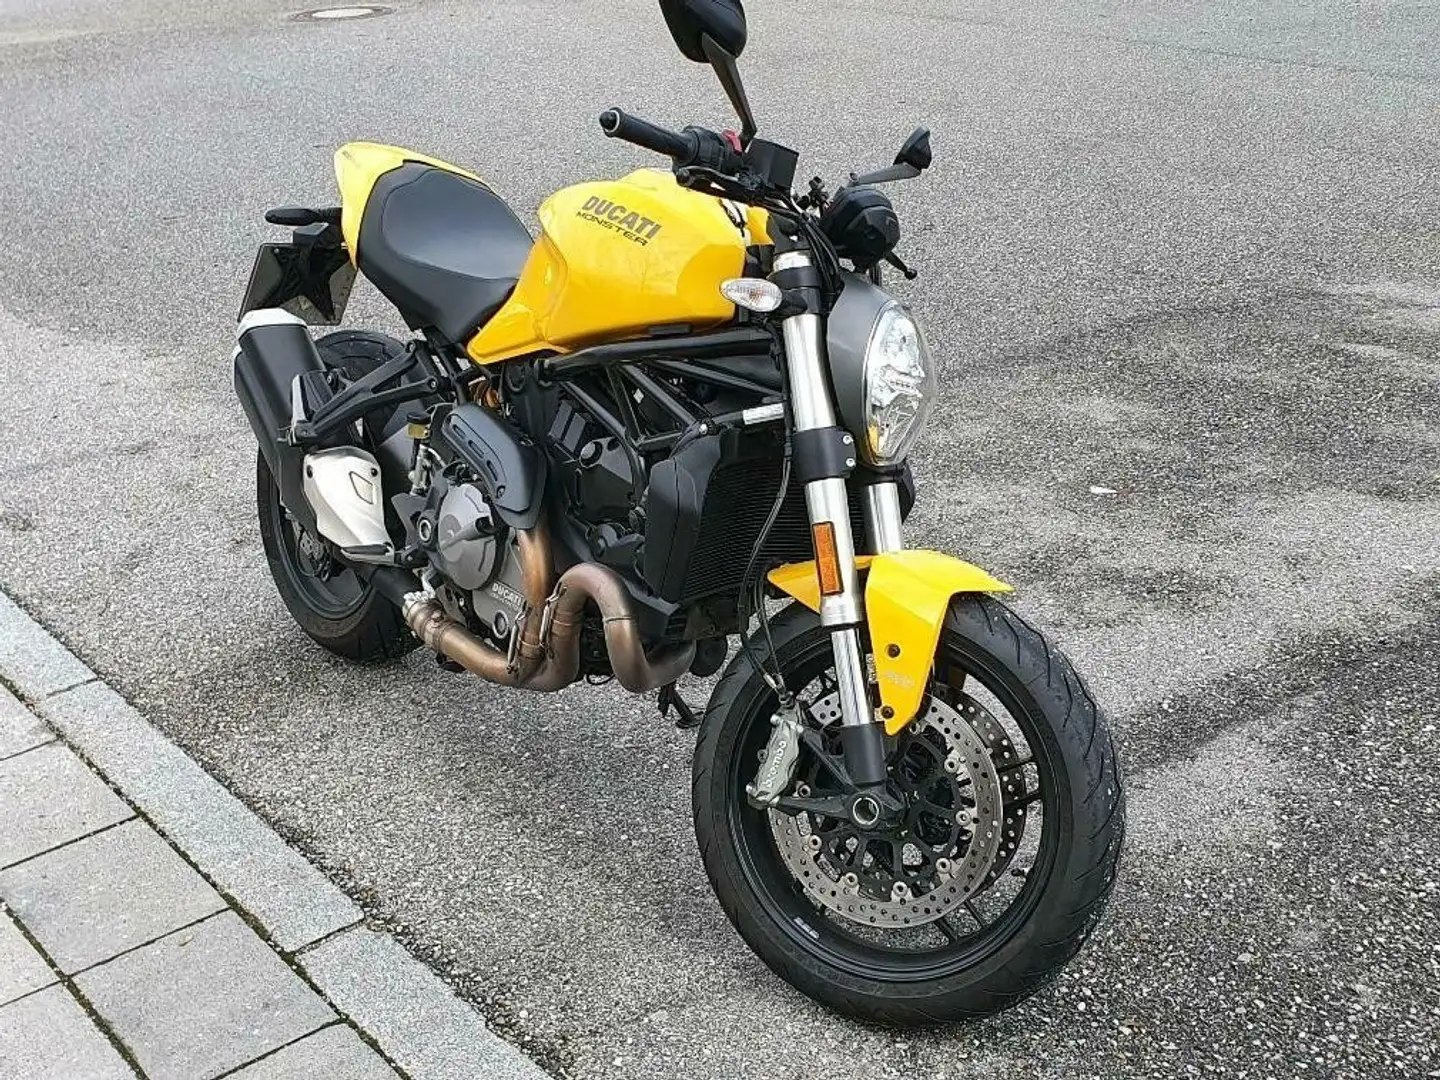 Ducati Monster 821 Jaune - 2